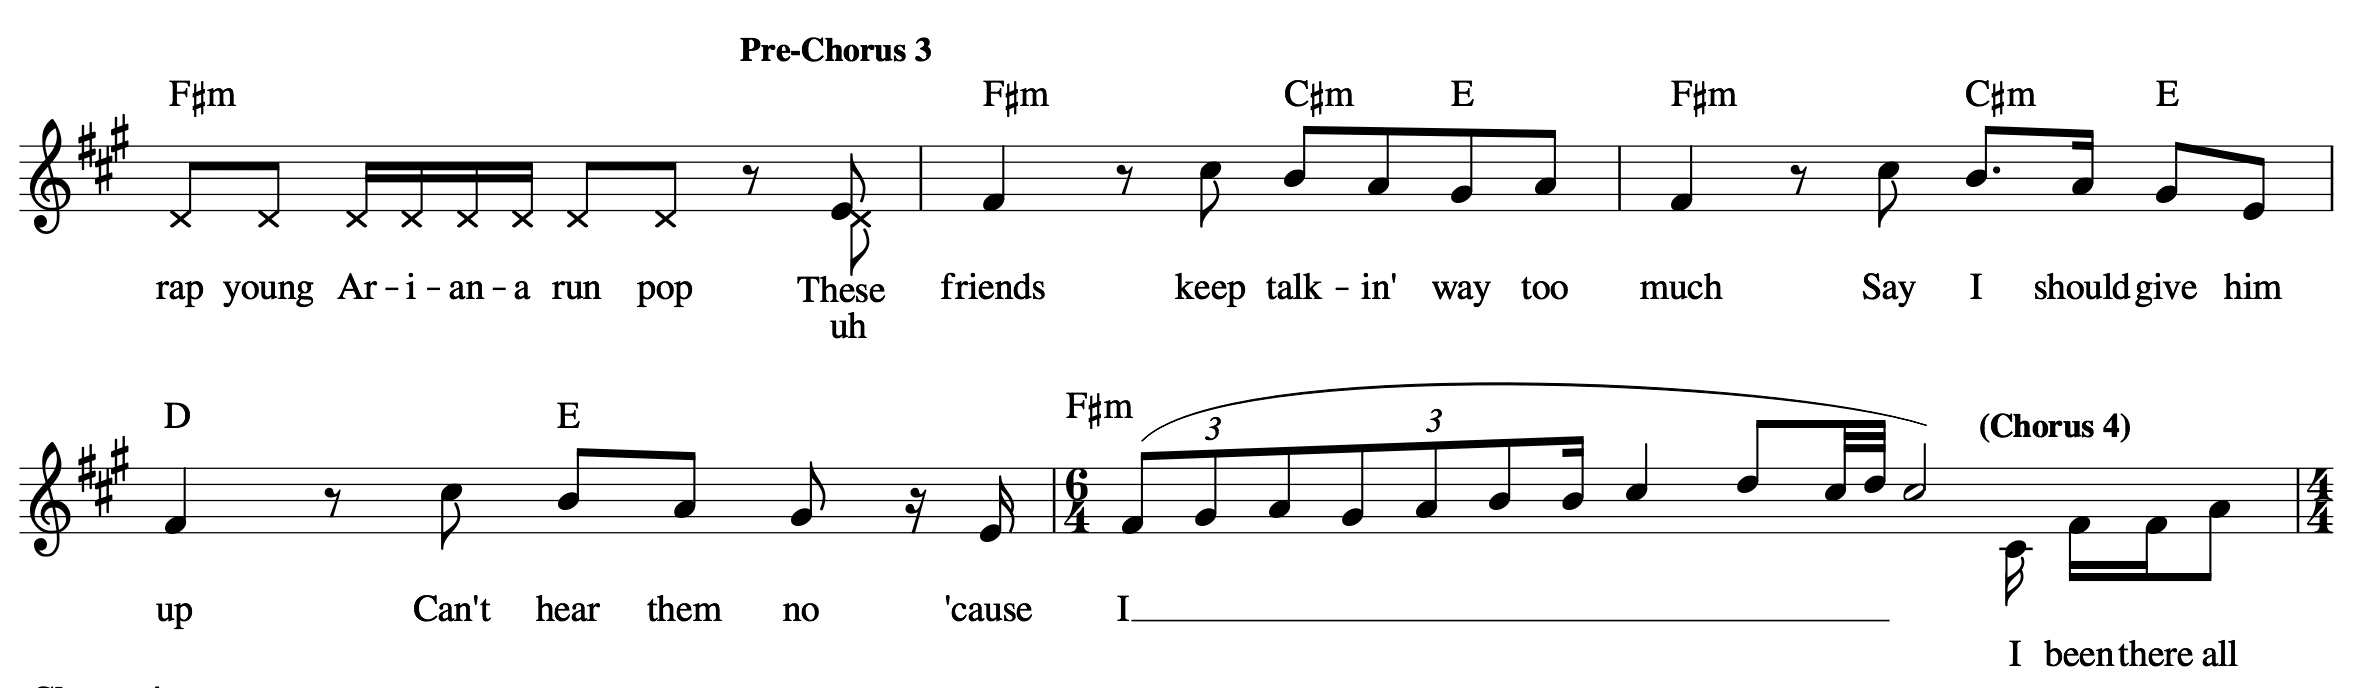 Pre-Chorus 3